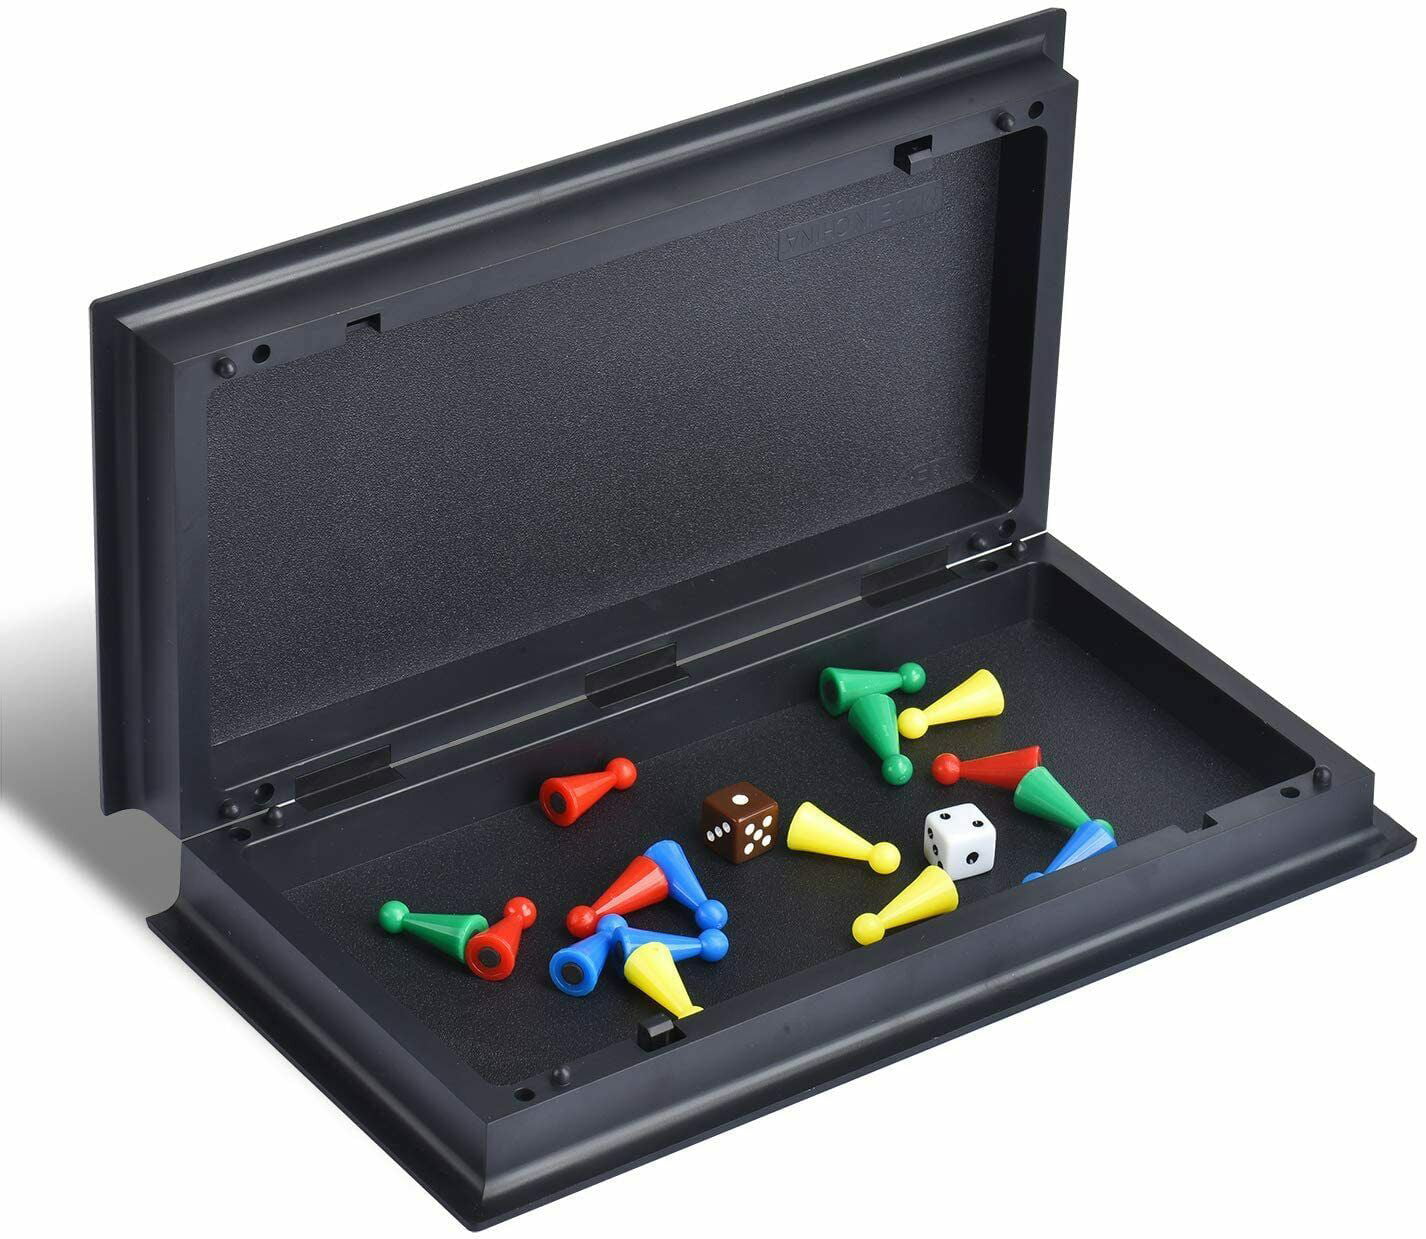  KIDAMI Ludo Magnetic Board Game Set, Children's Family